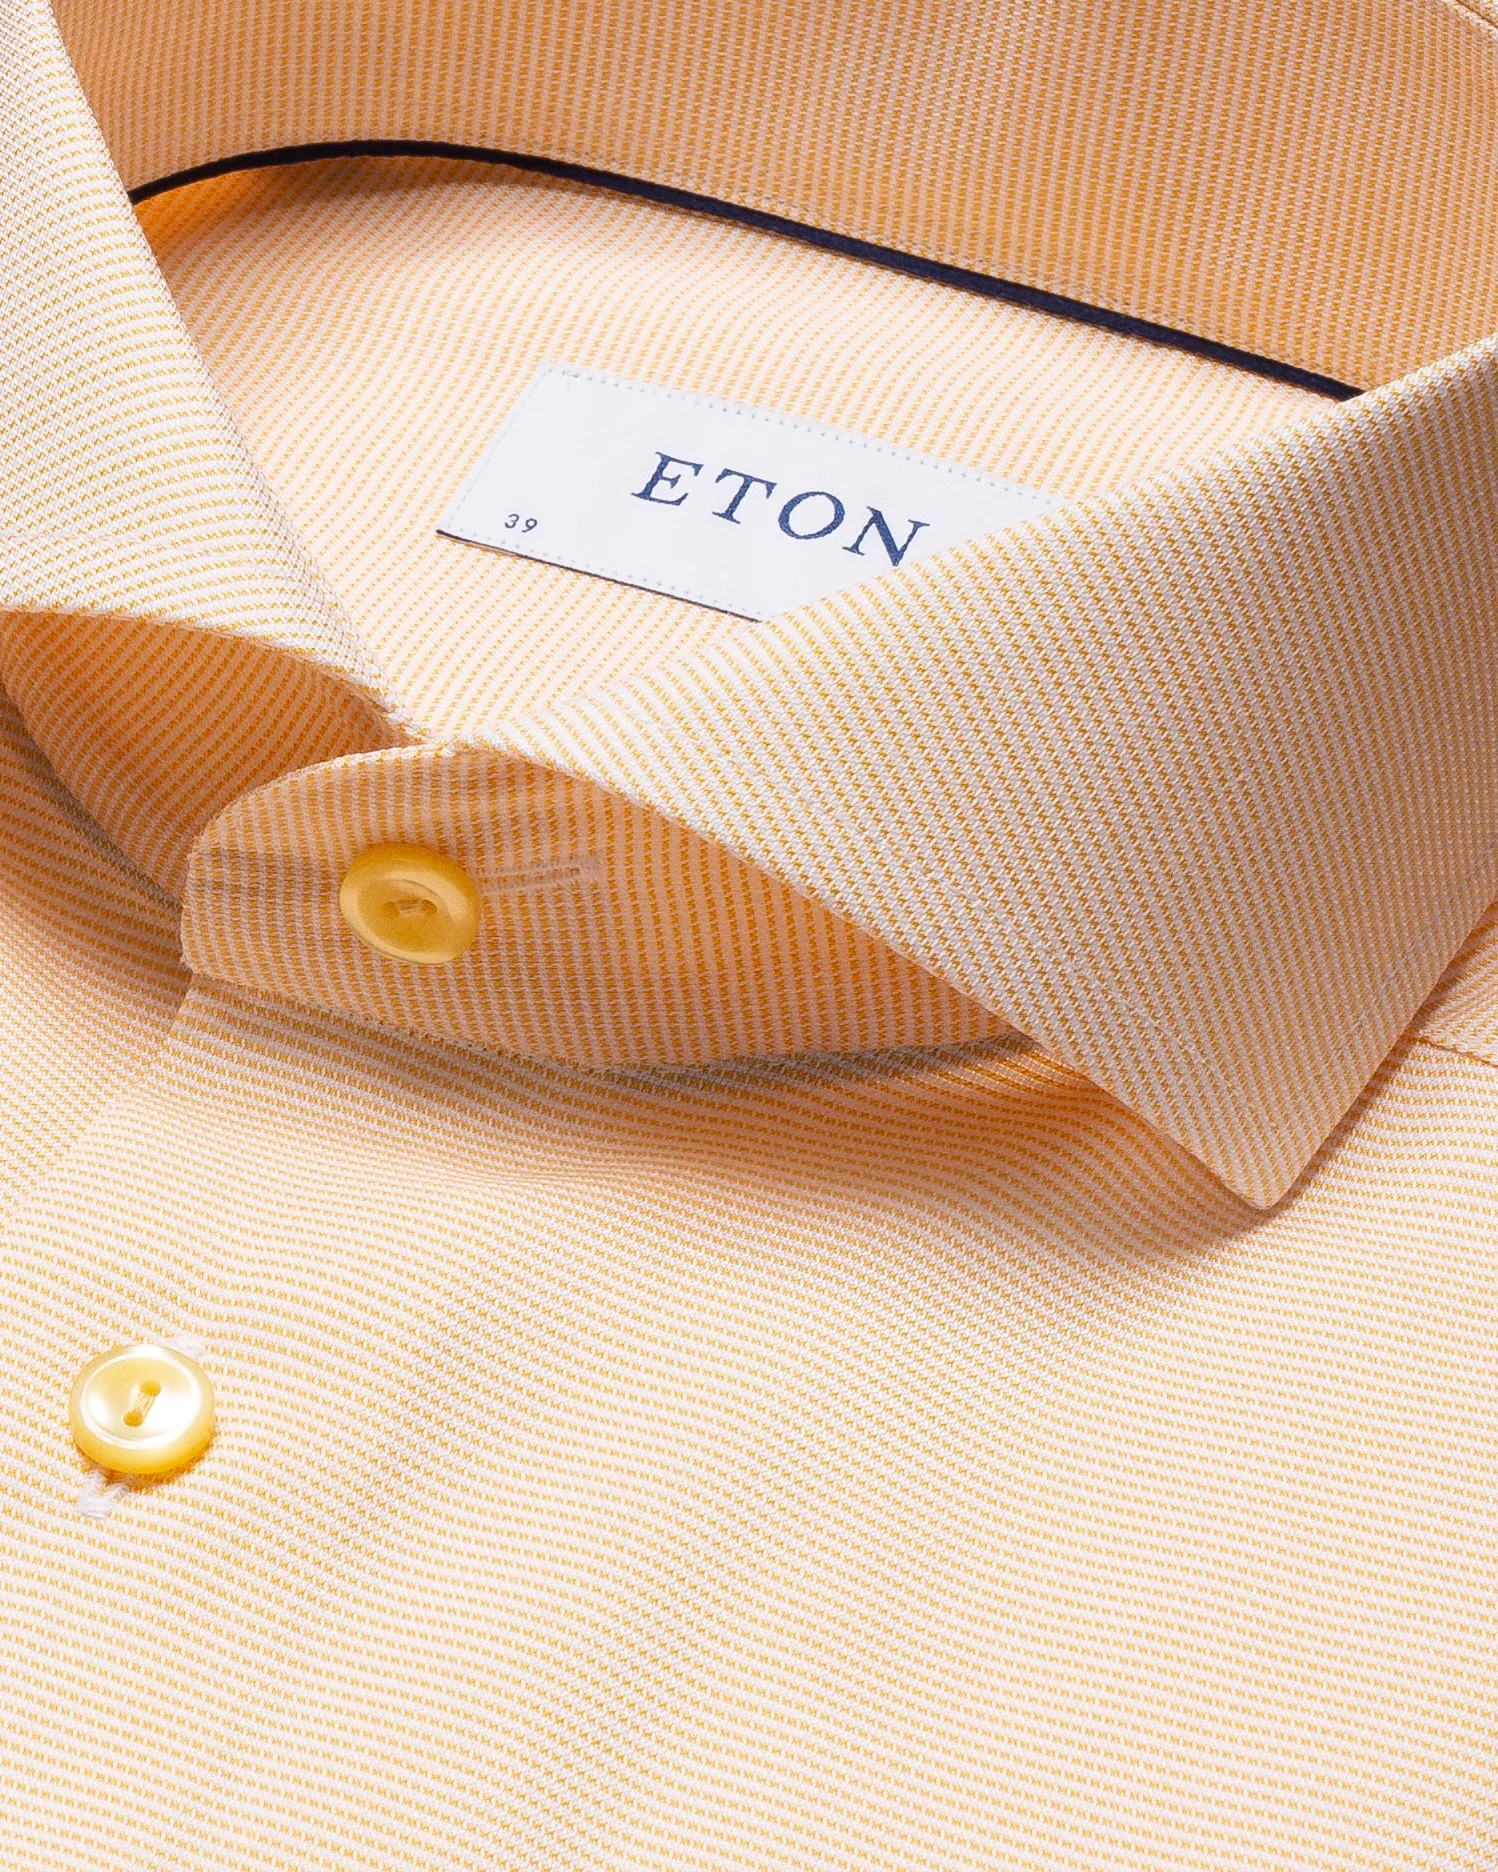 Eton - light yellow twill shirt extreme cut away